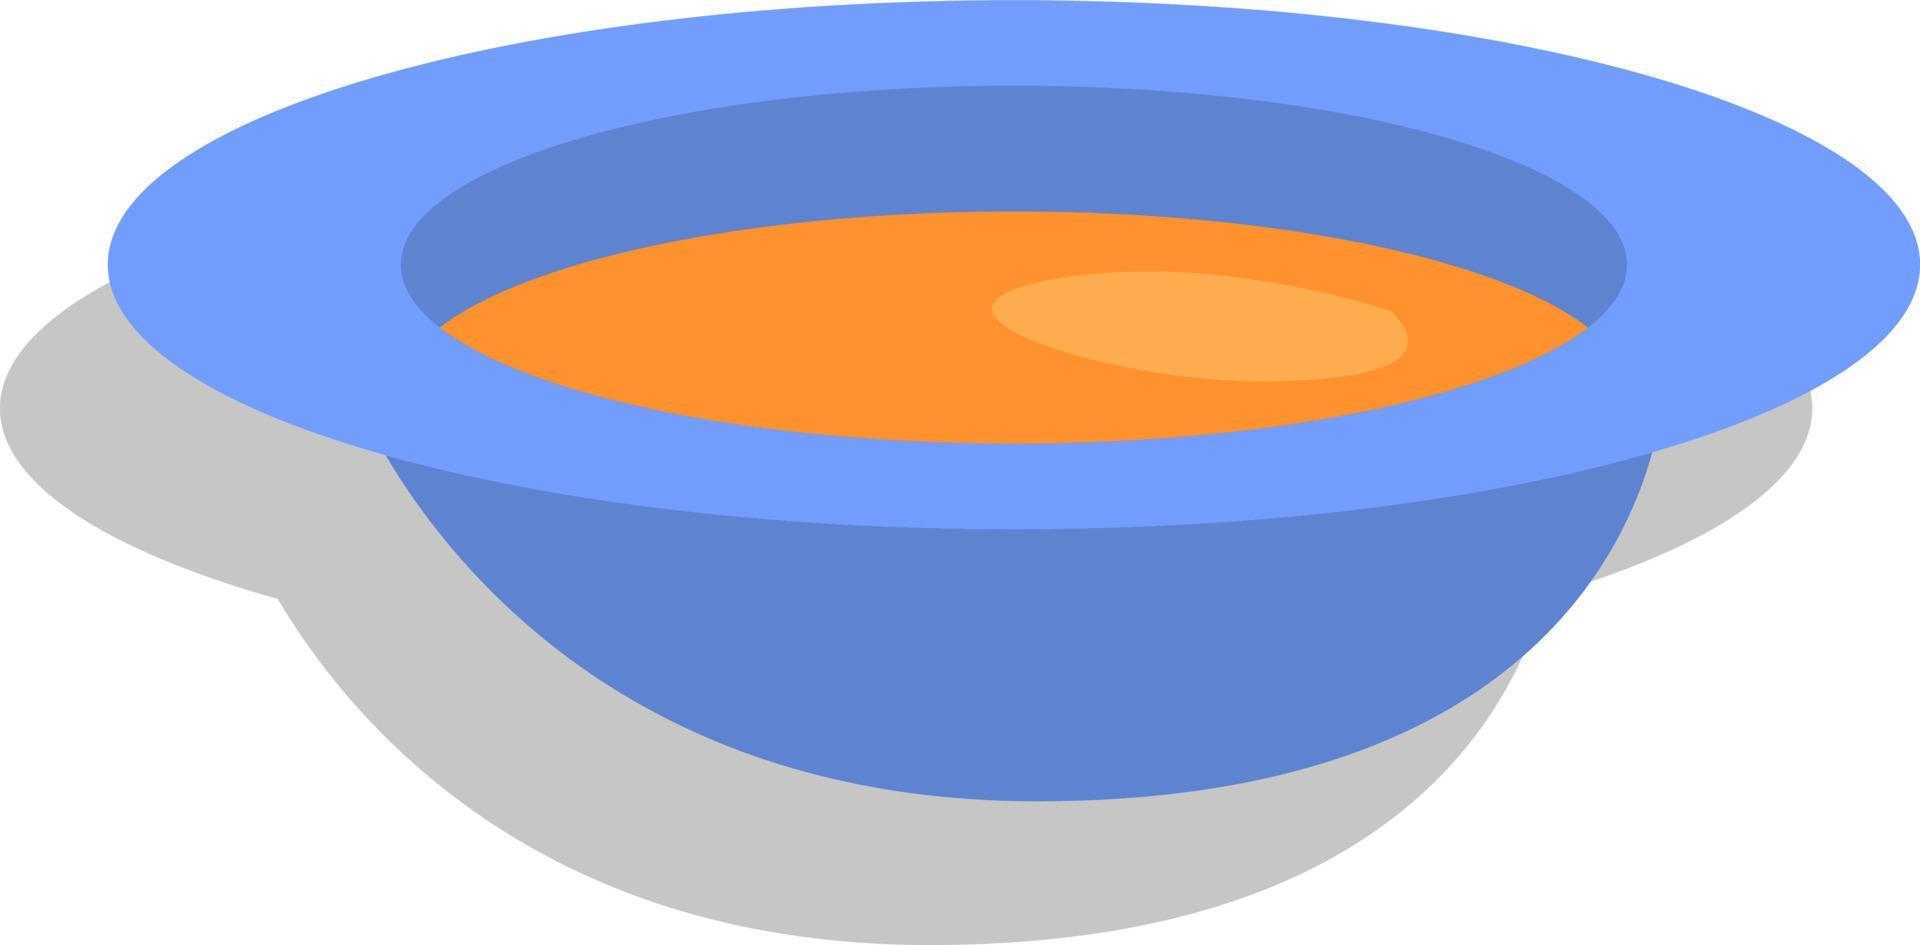 varm soppa, illustration, vektor, på en vit bakgrund. vektor